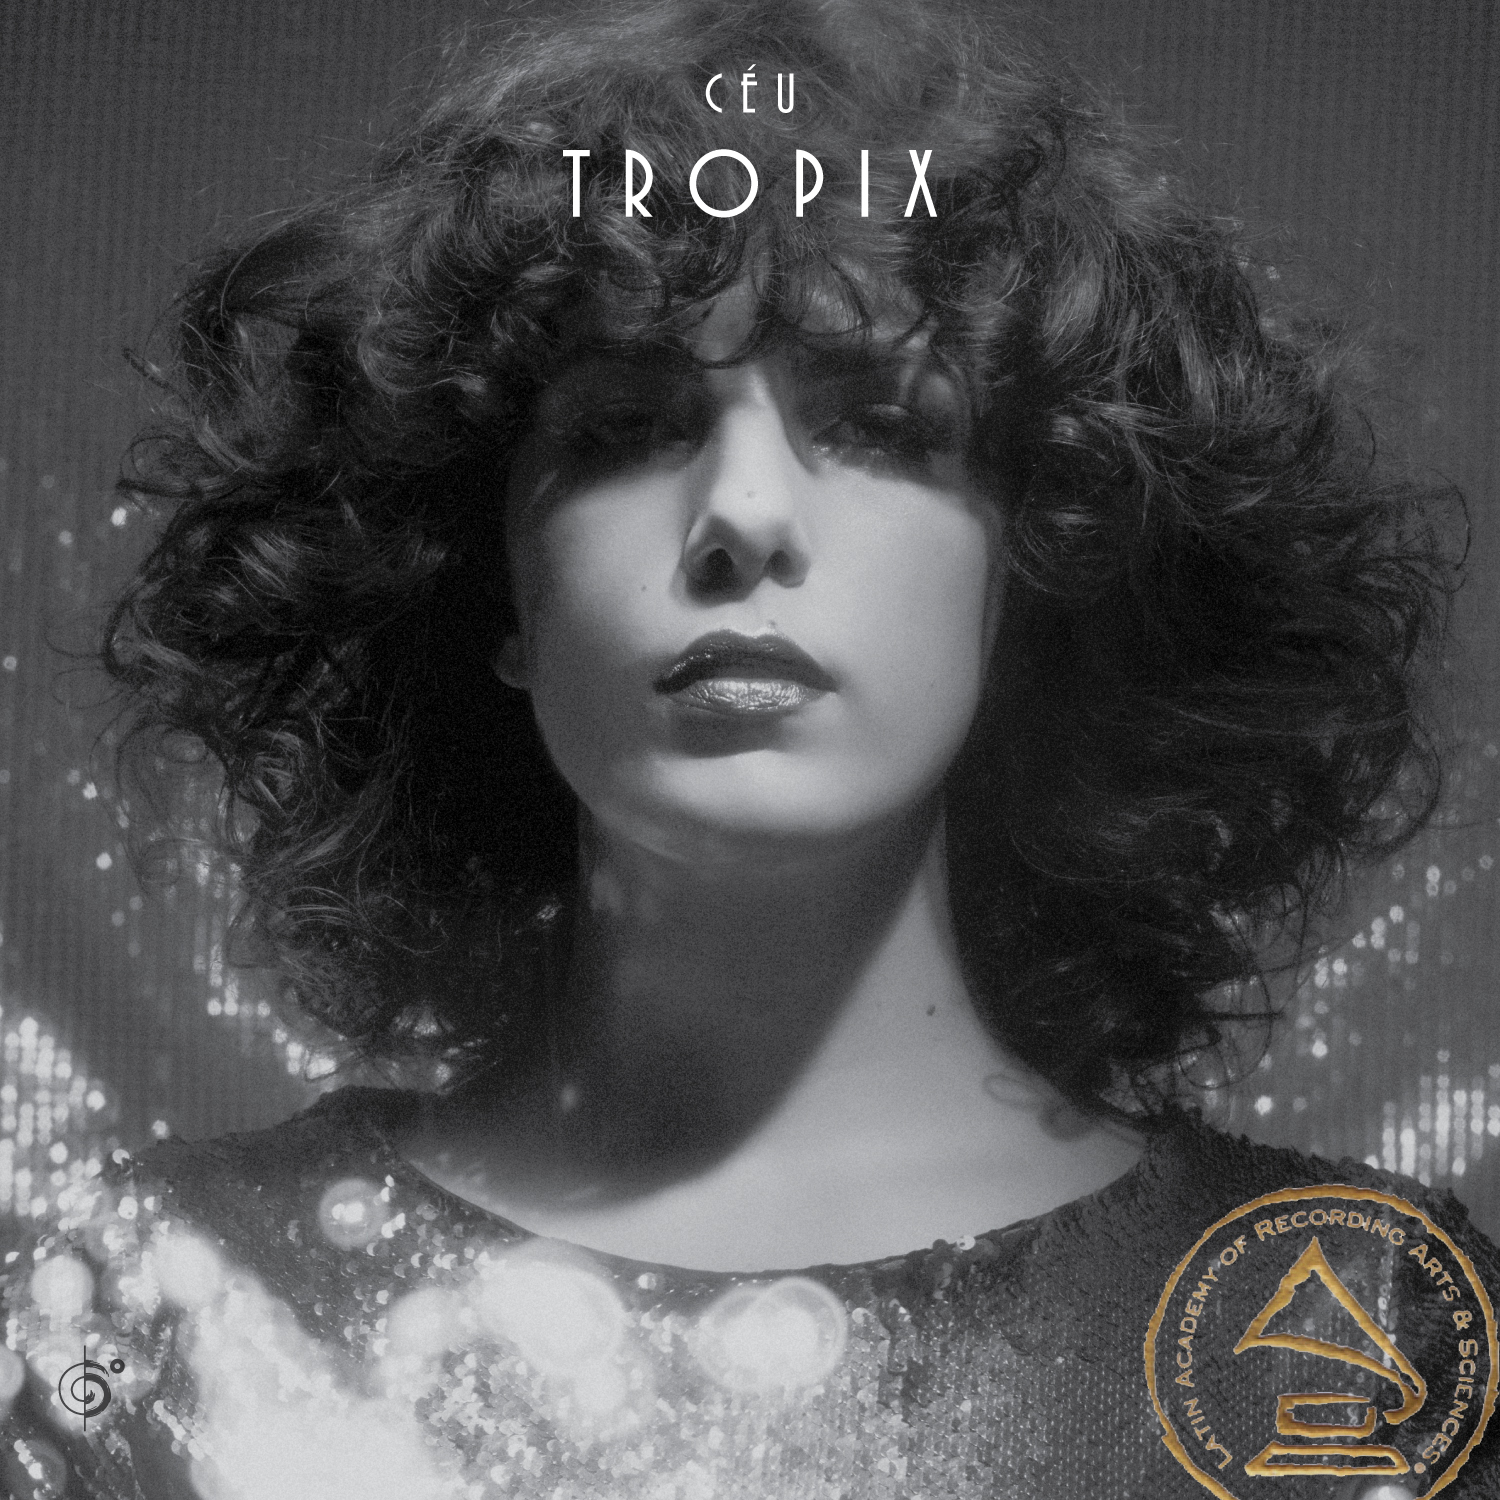 Céu’s Tropix got nominated to the Latin Grammys!